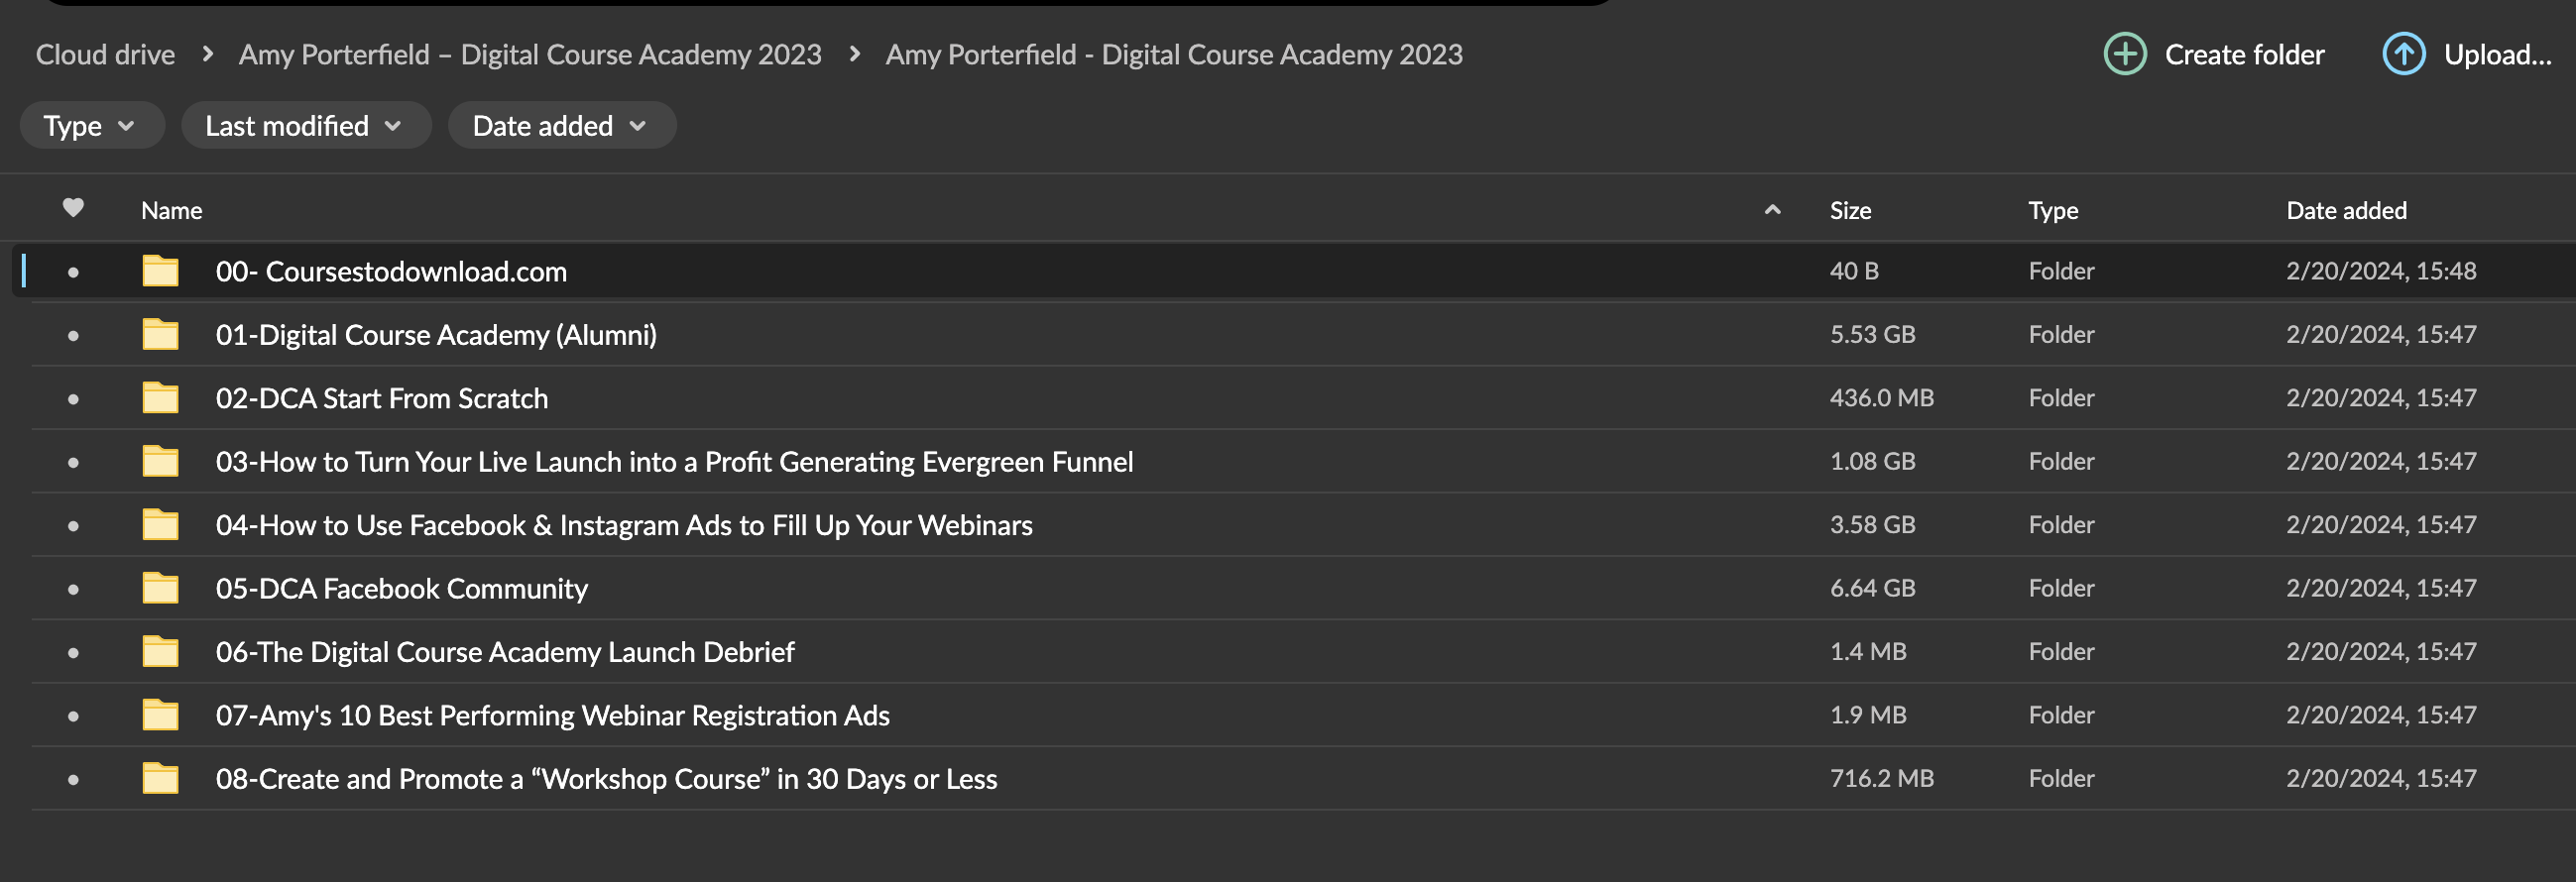 Amy Porterfield – Digital Course Academy 2023 Download